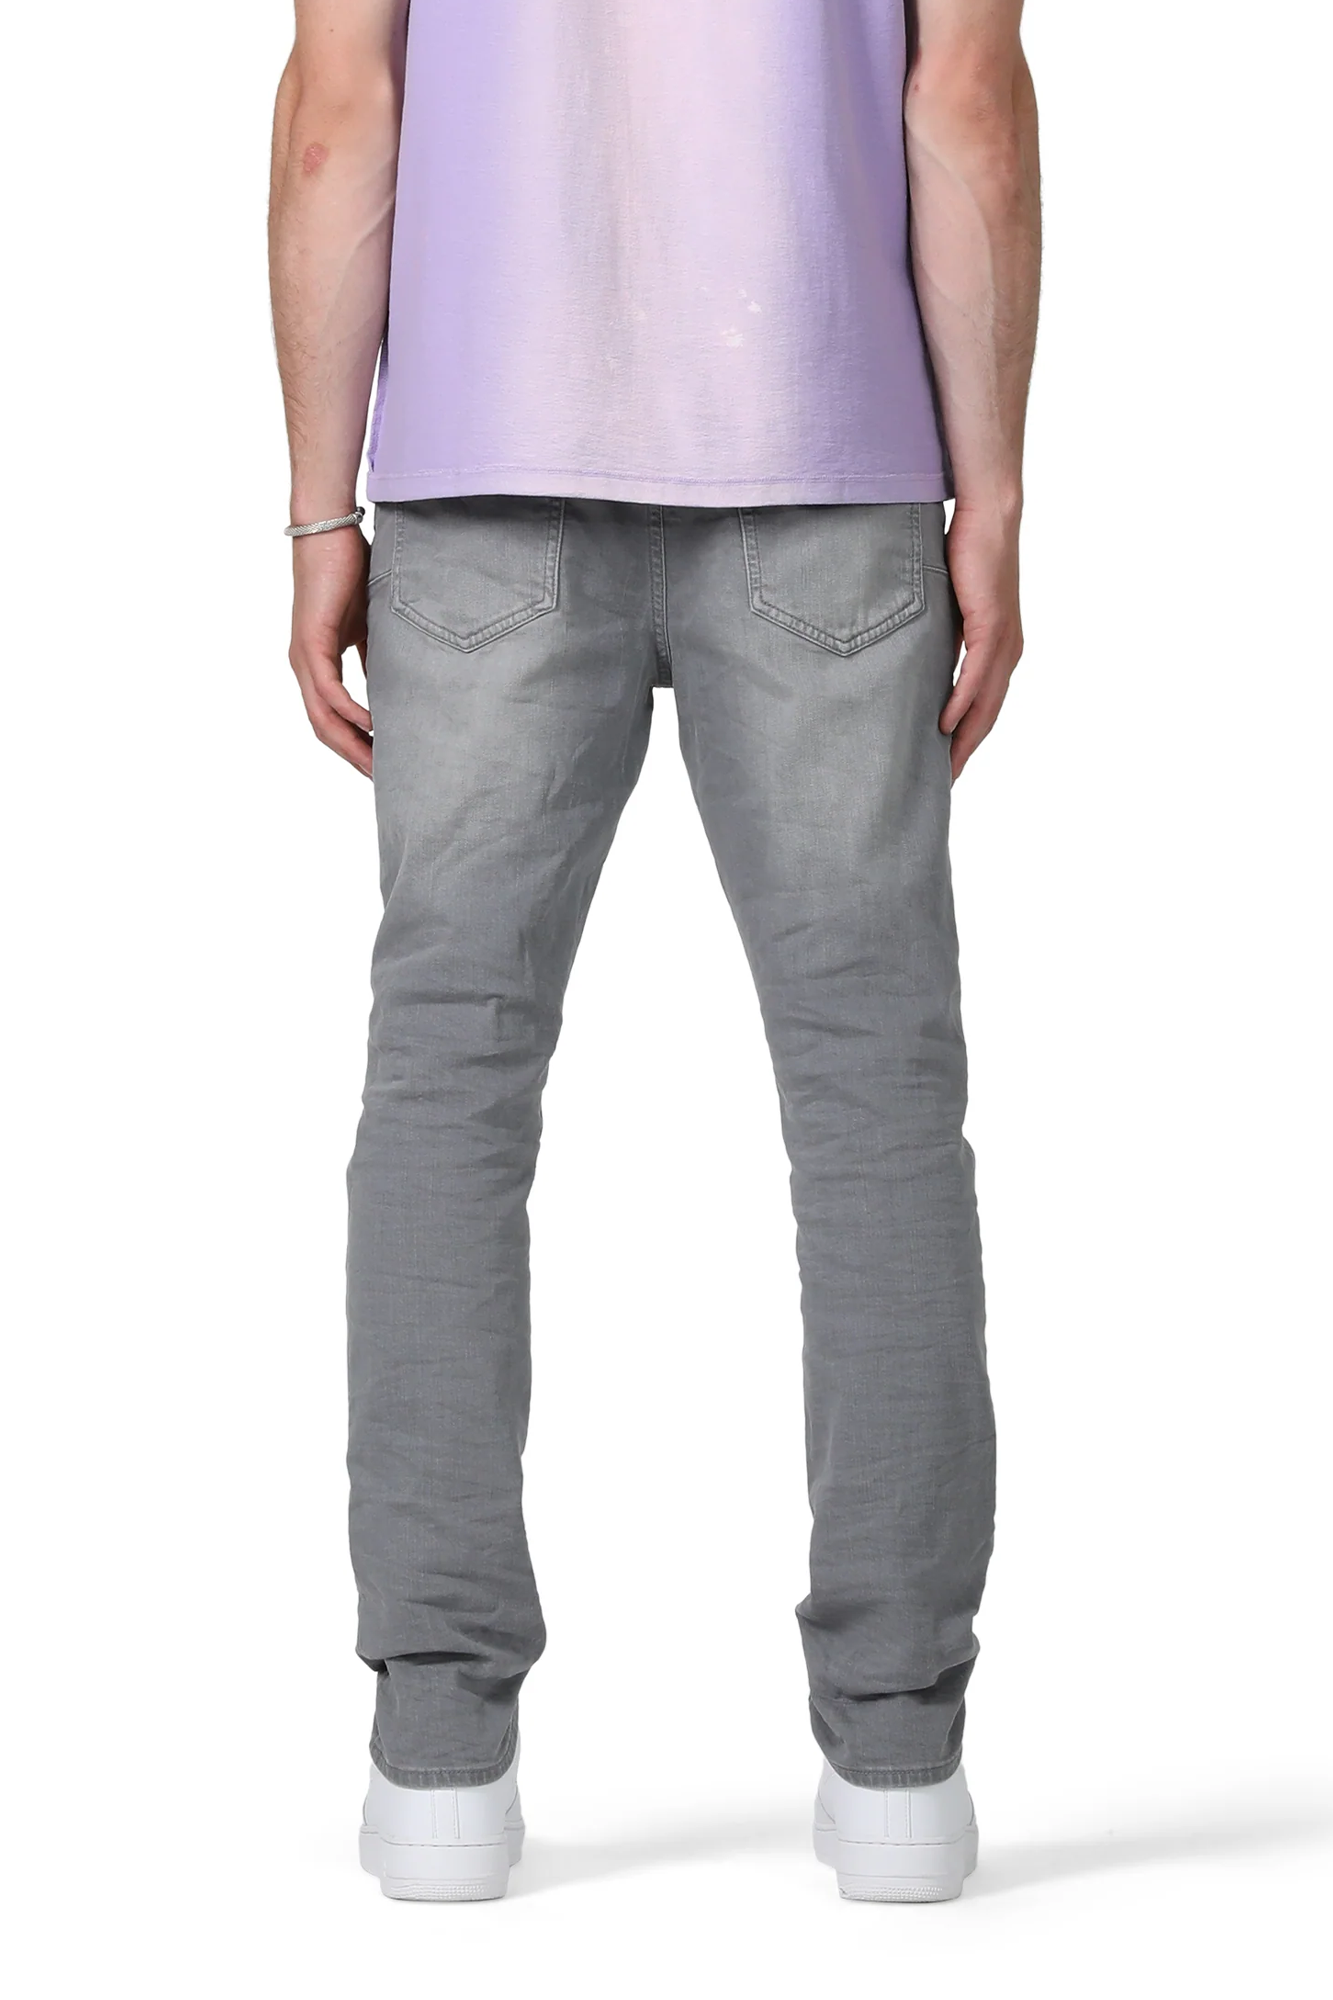 Designer Purple Denim Pant For Men Distressed Ripped Biker Style, Slim Fit,  Size 28 40 From Hn05, $49.45